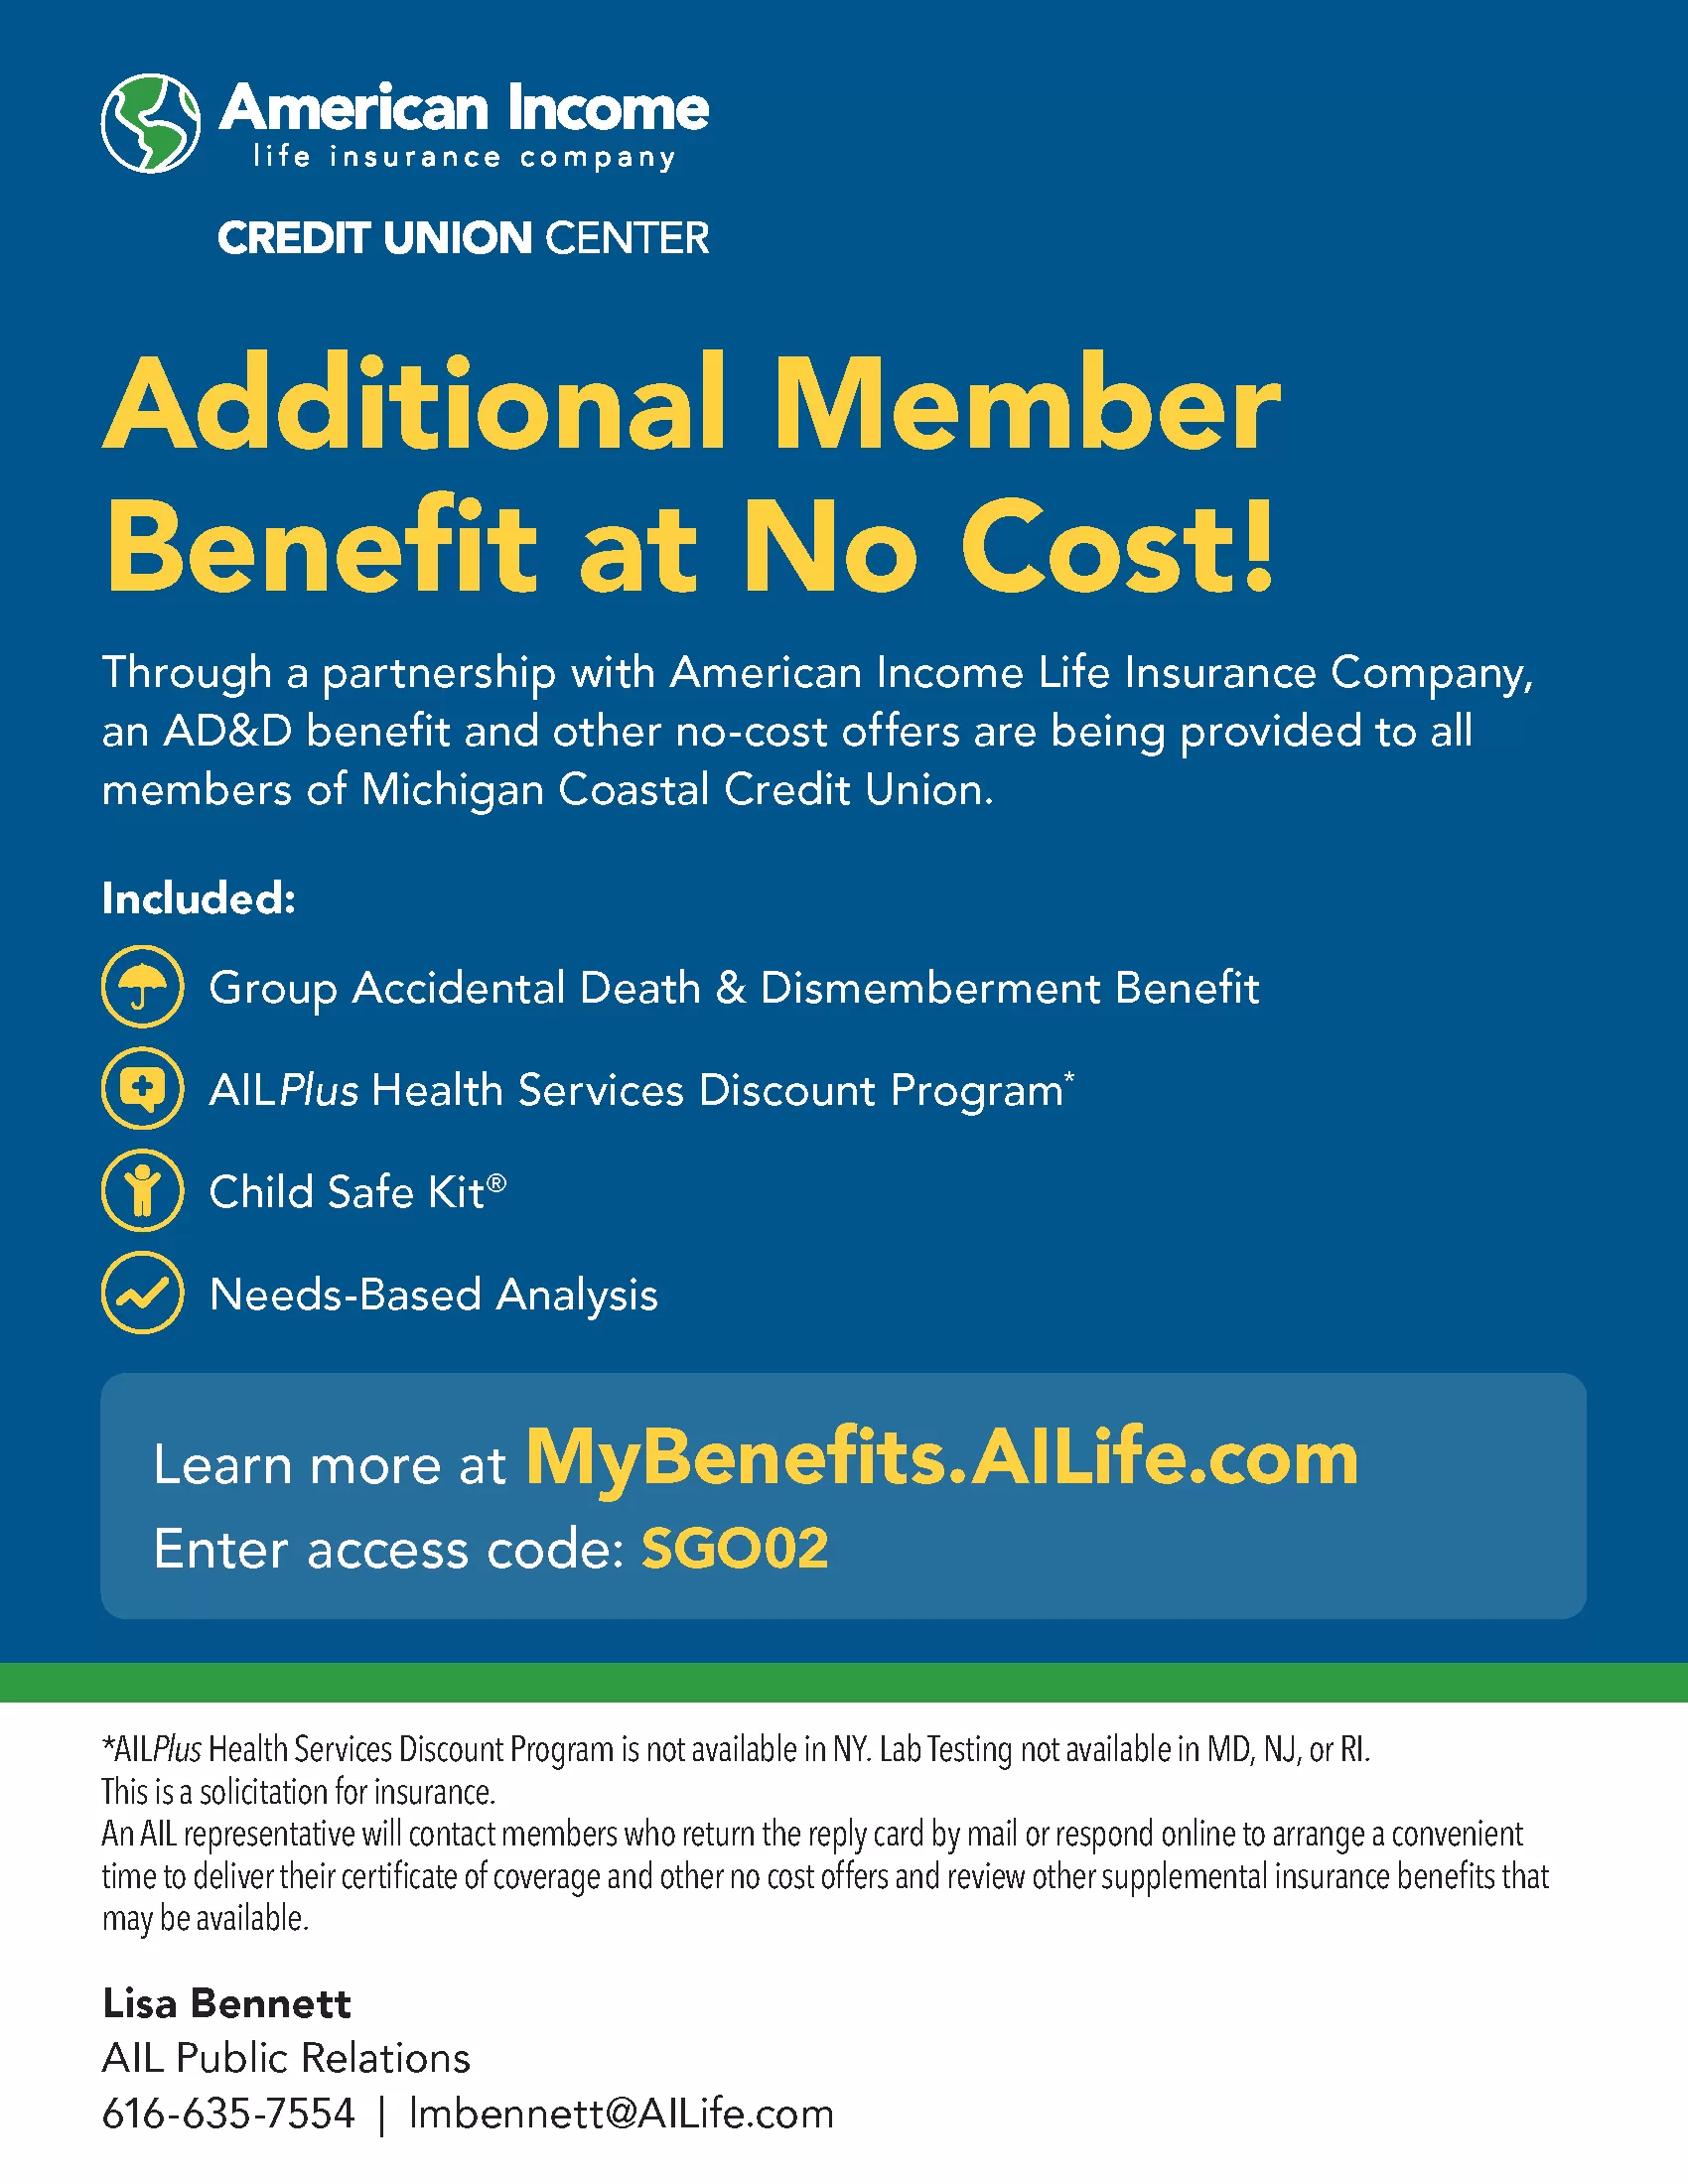 In the Know Michigan Coastal Credit Union